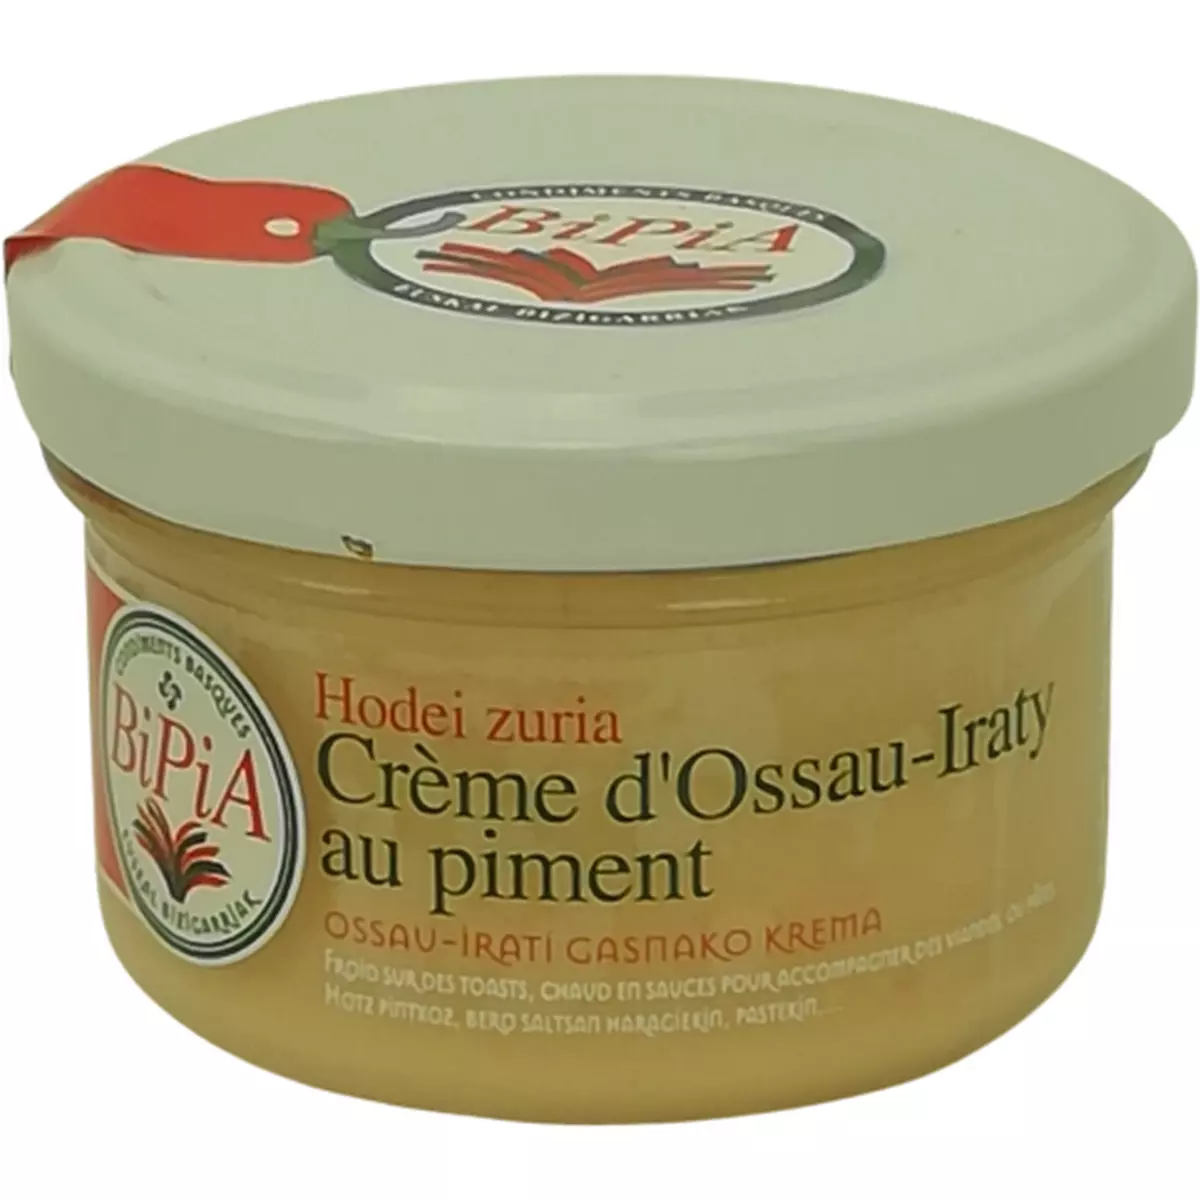 BIPIA Hodei zuria Crème d'Ossau-Iraty au piment 90g